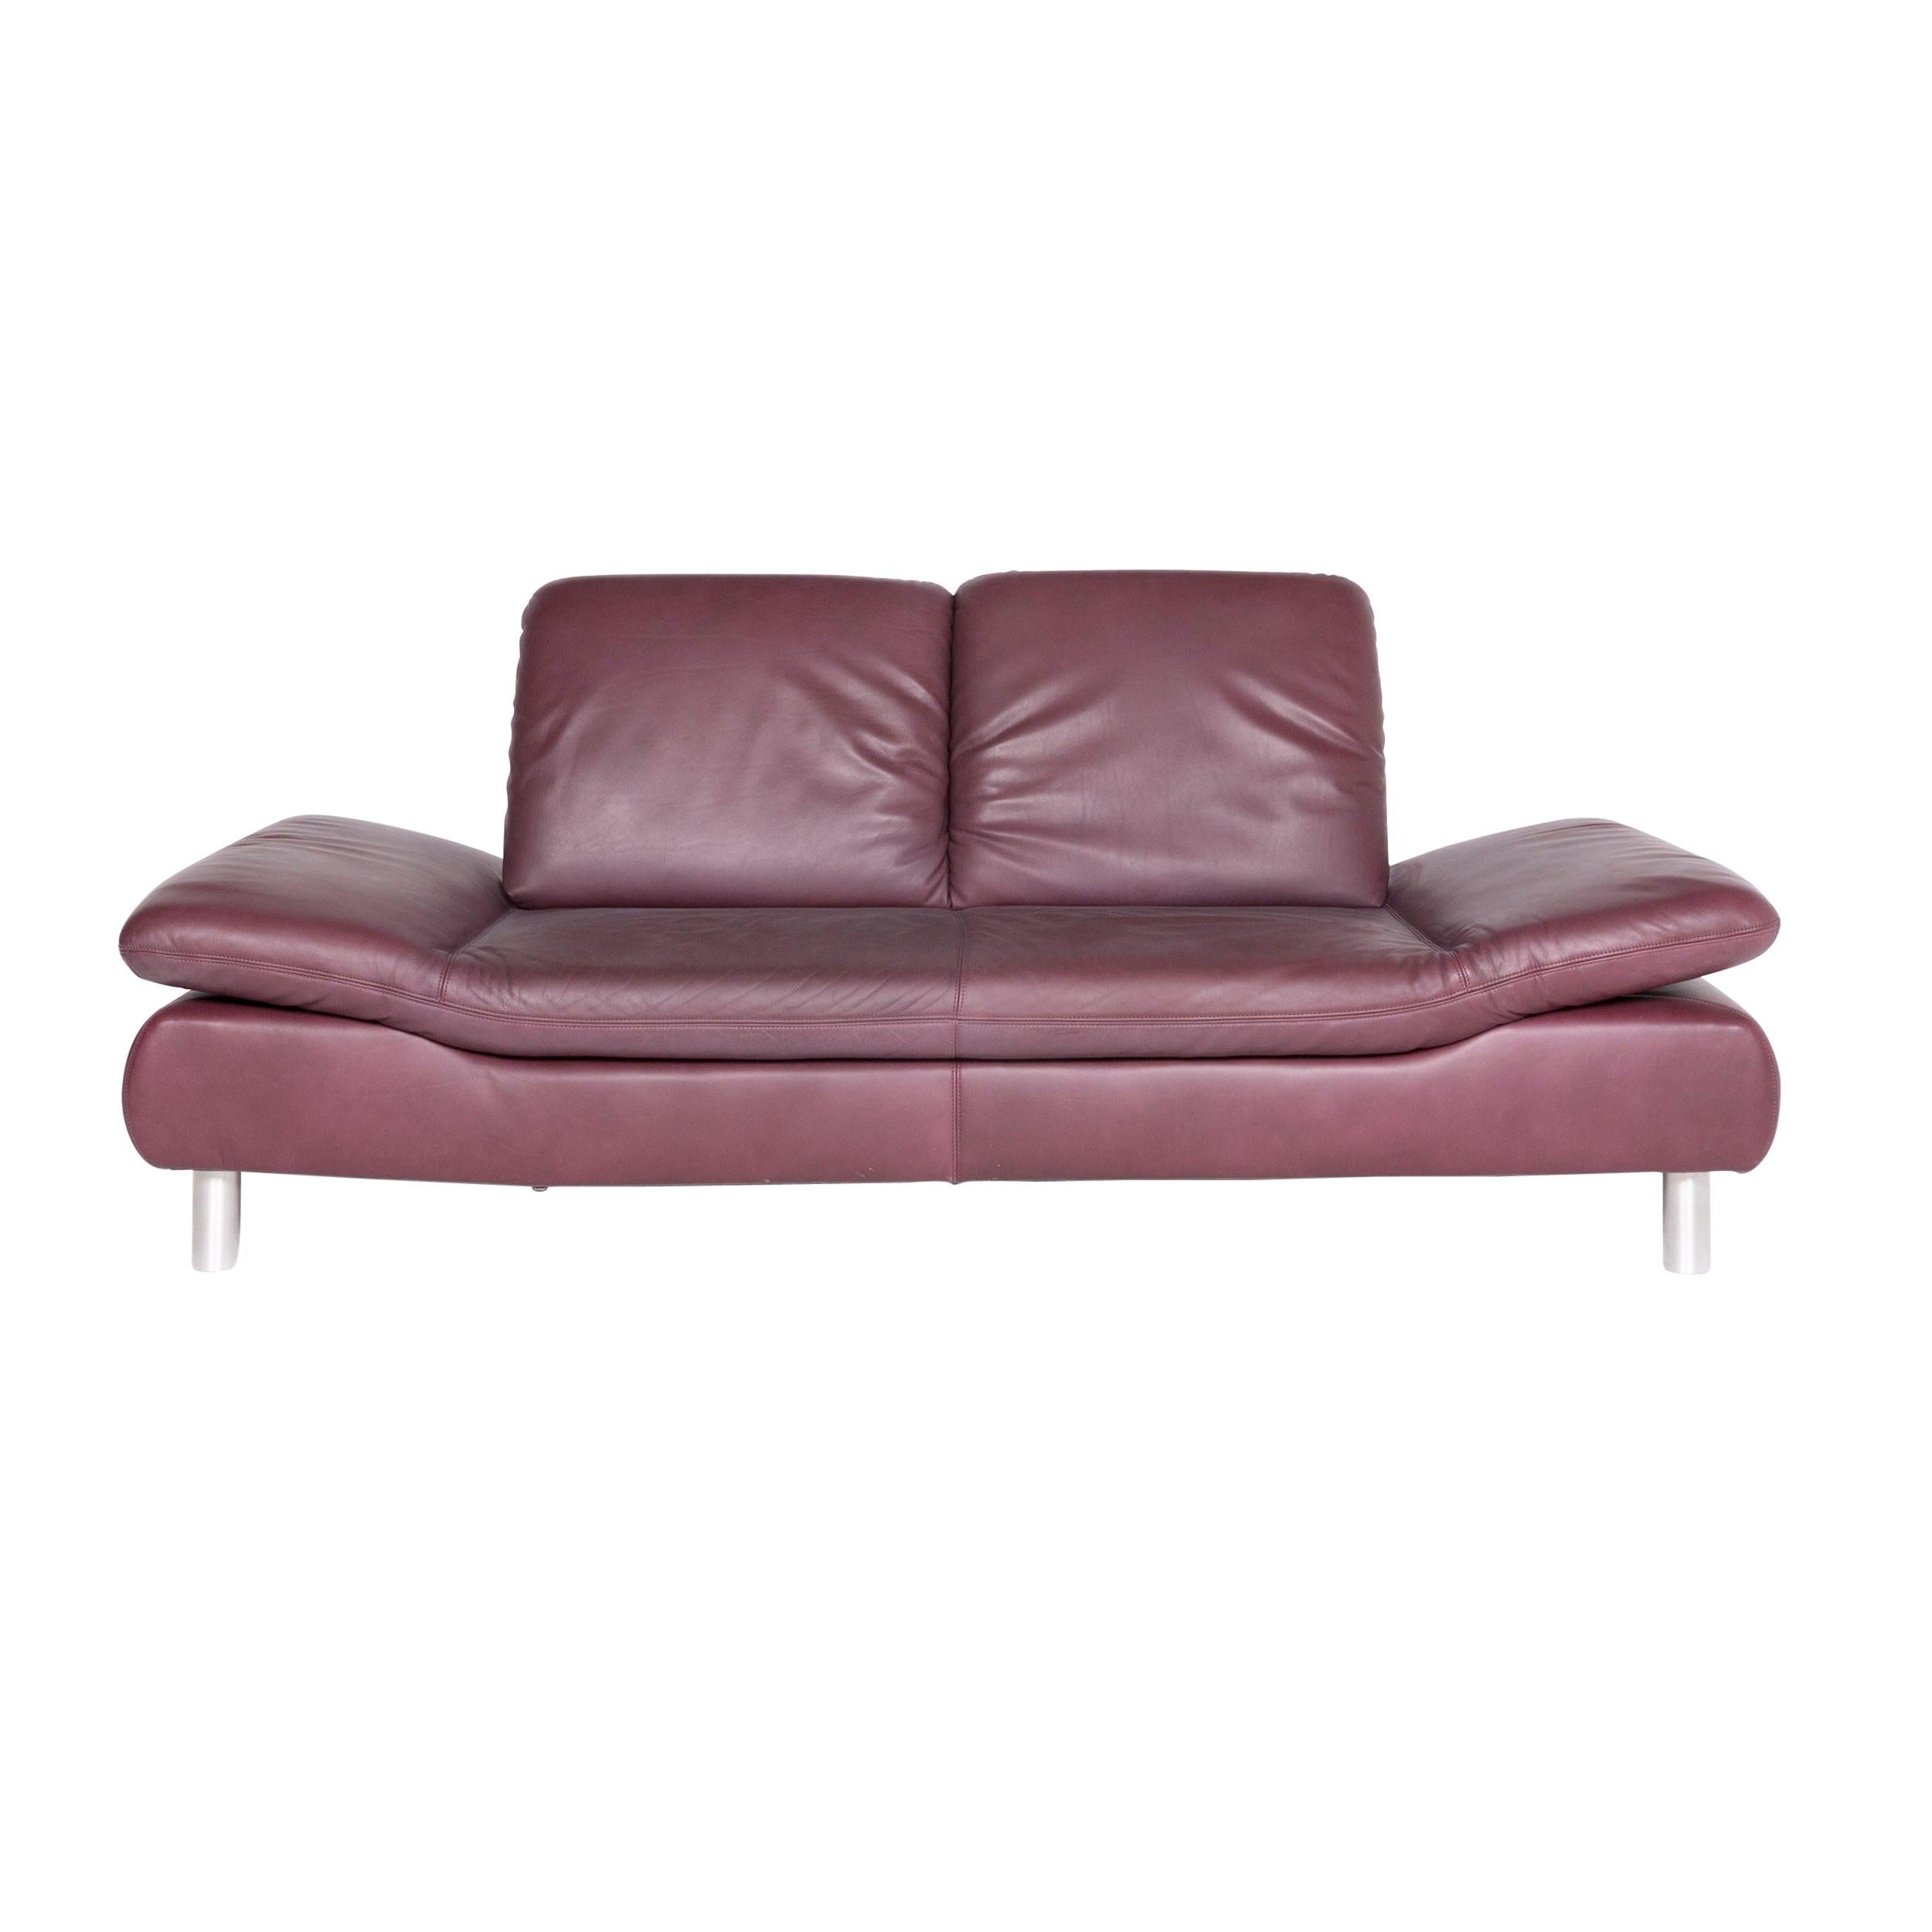 Koinor Rivoli Designer Leather Sofa Purple Genuine Leather Two-Seat Couch For Sale